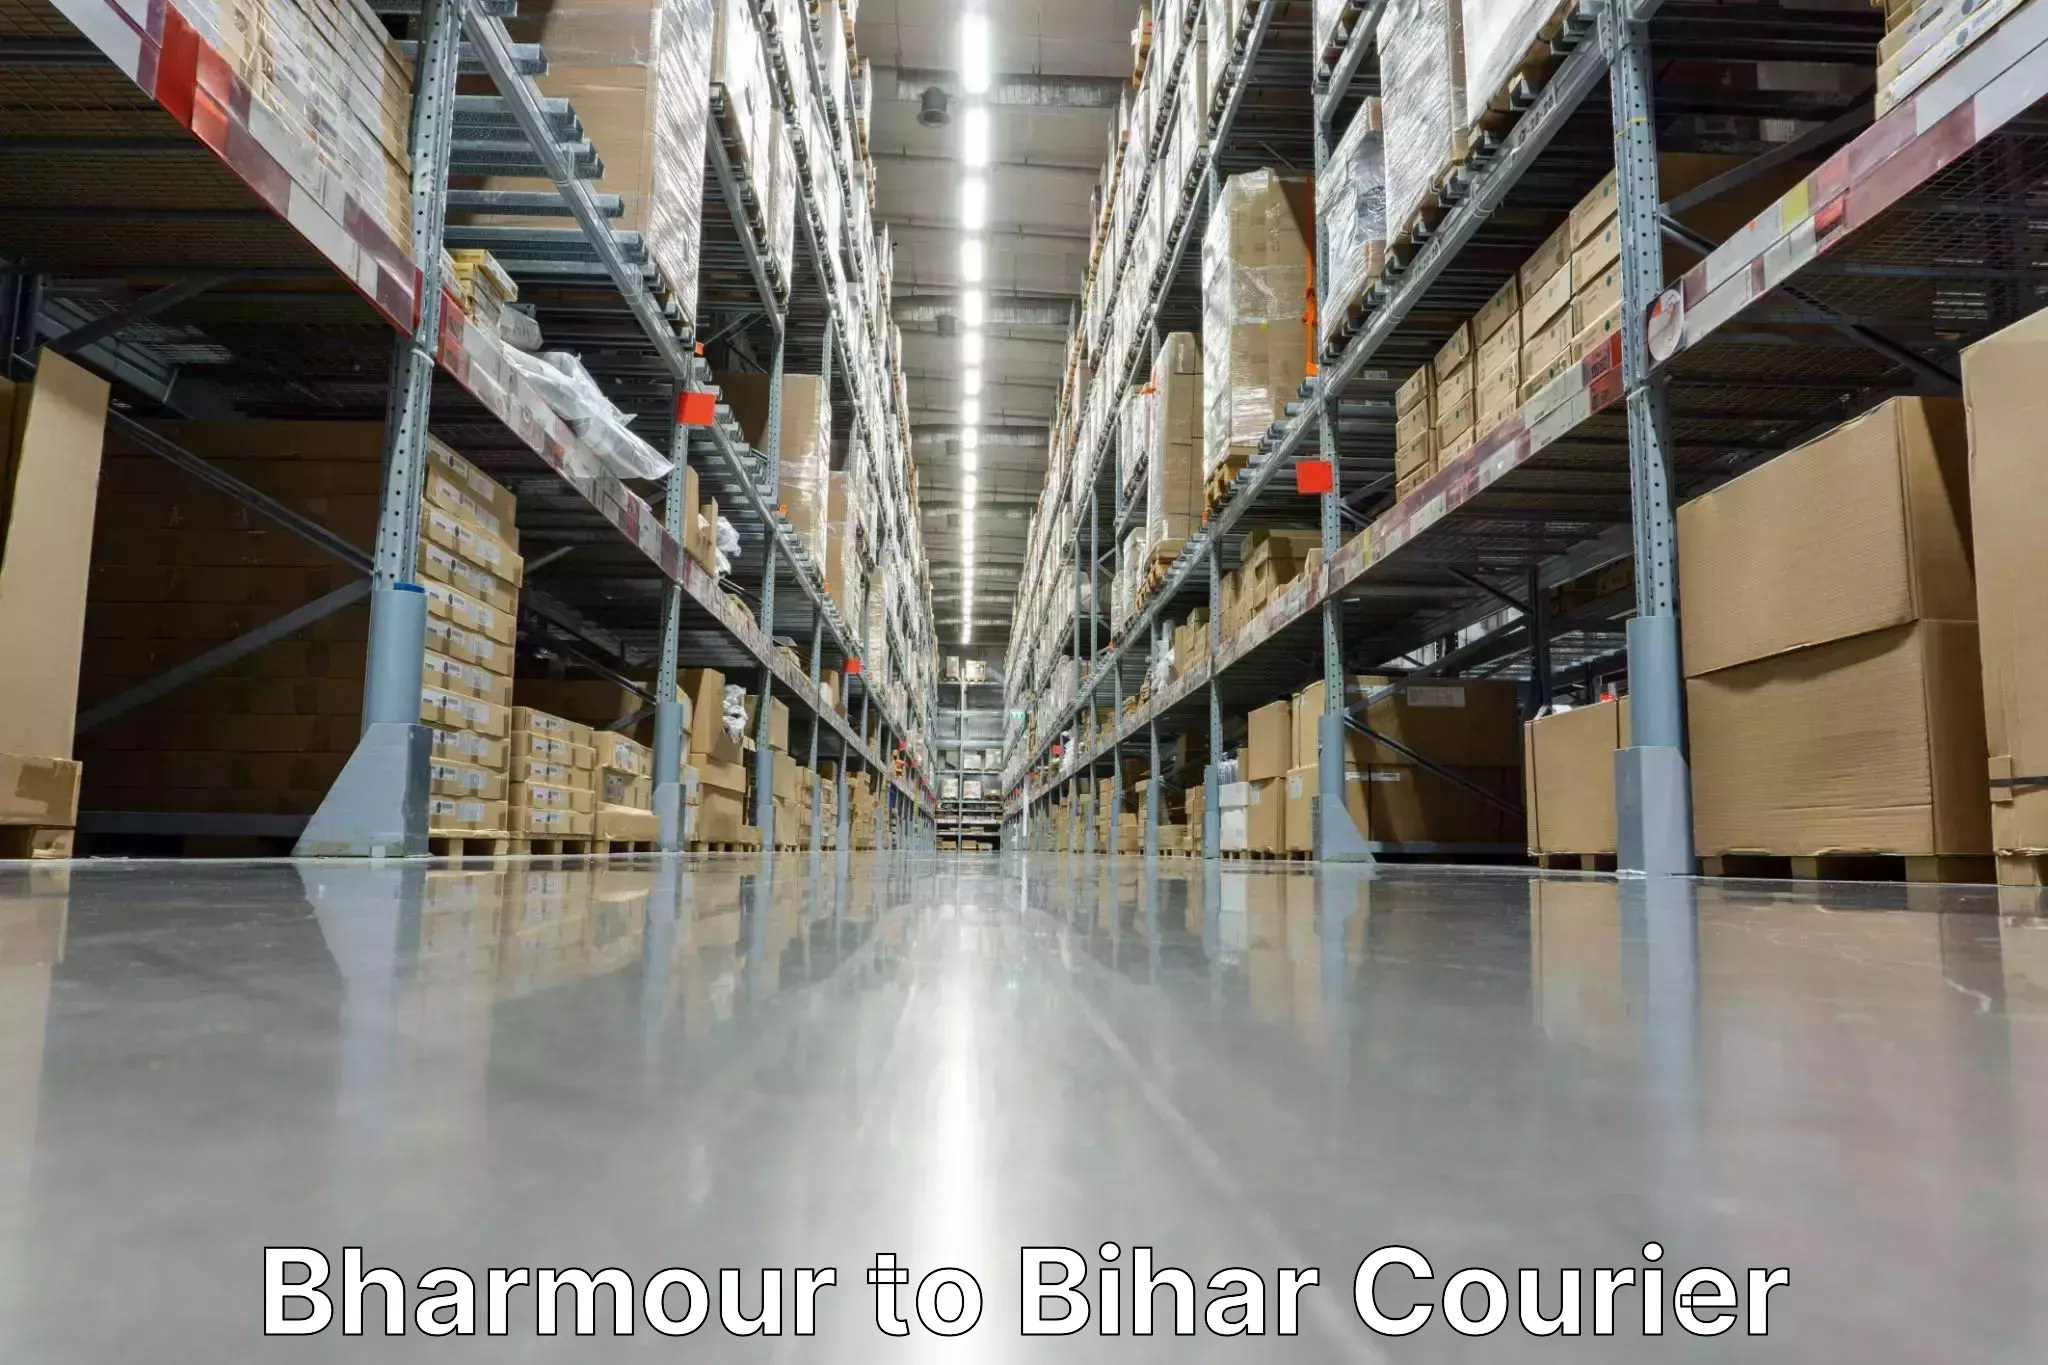 Courier service innovation Bharmour to Bihar